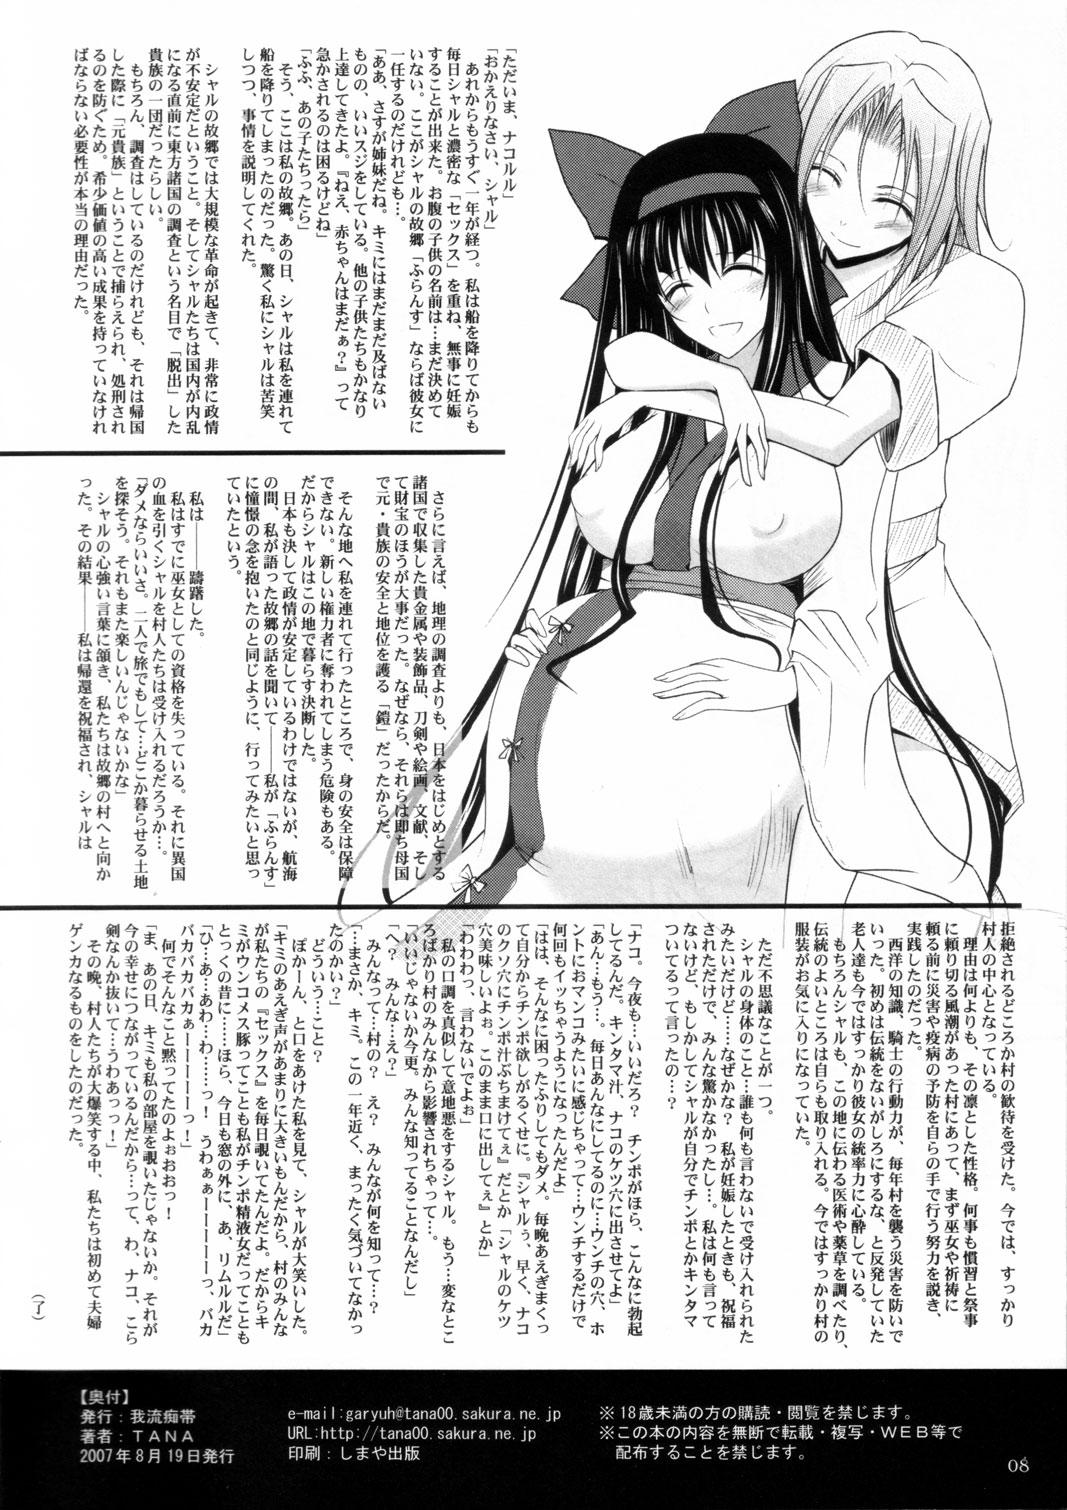 Perfect Pussy mama voyage - Samurai spirits Dildos - Page 8